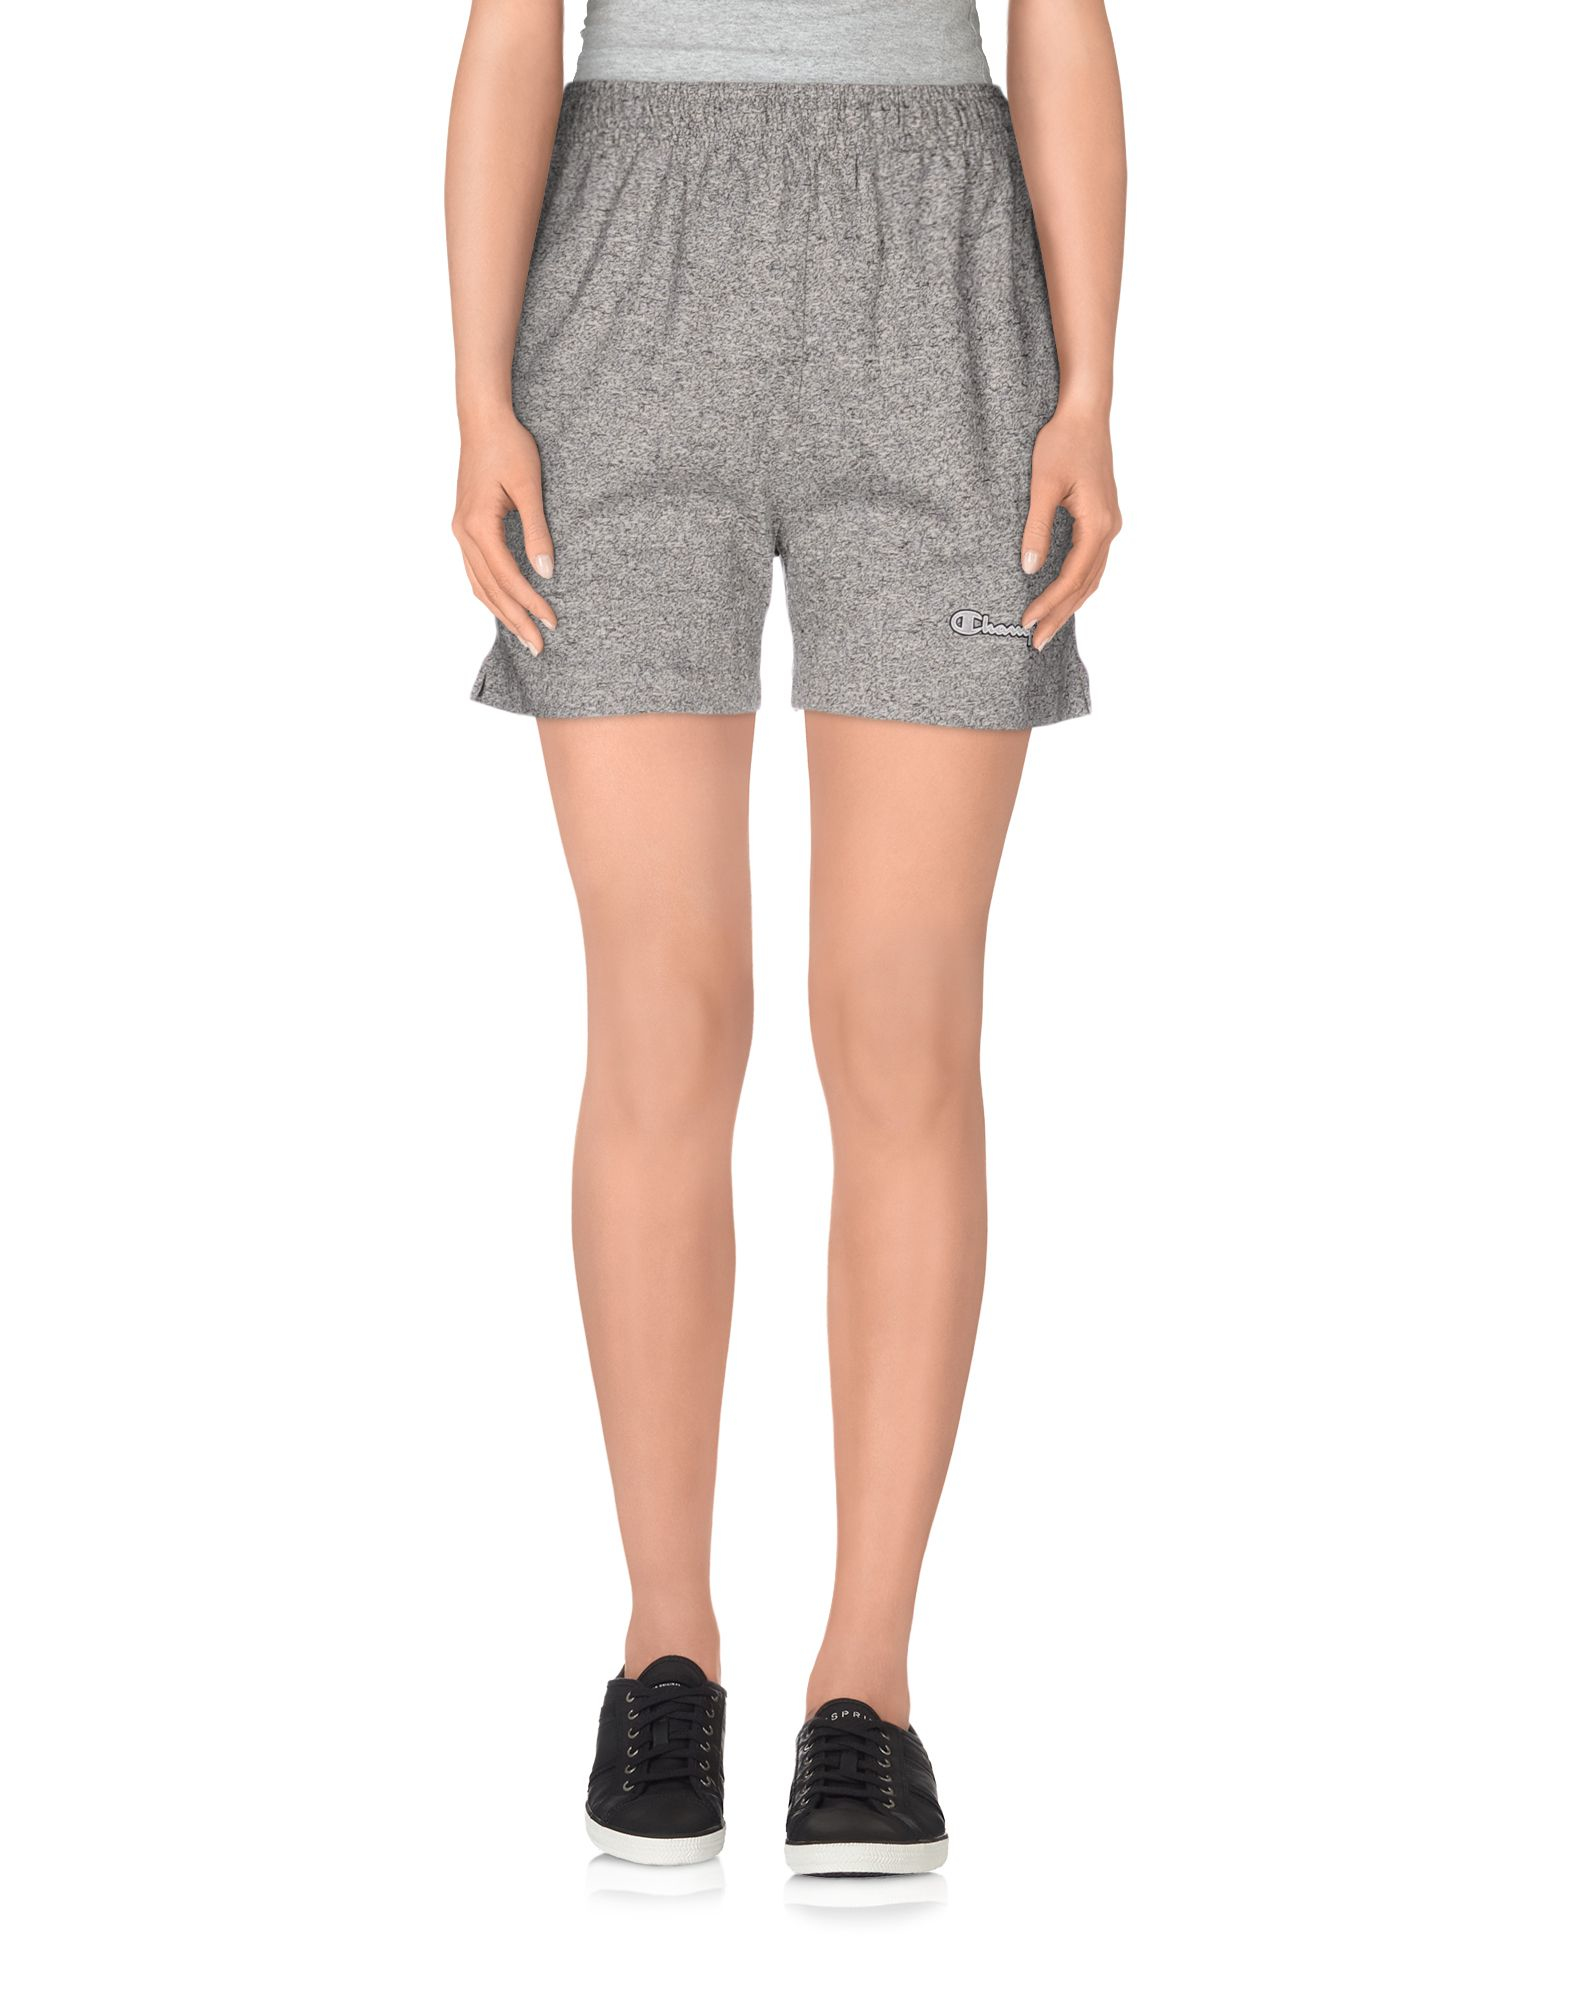 Lyst - Champion Shorts in Gray